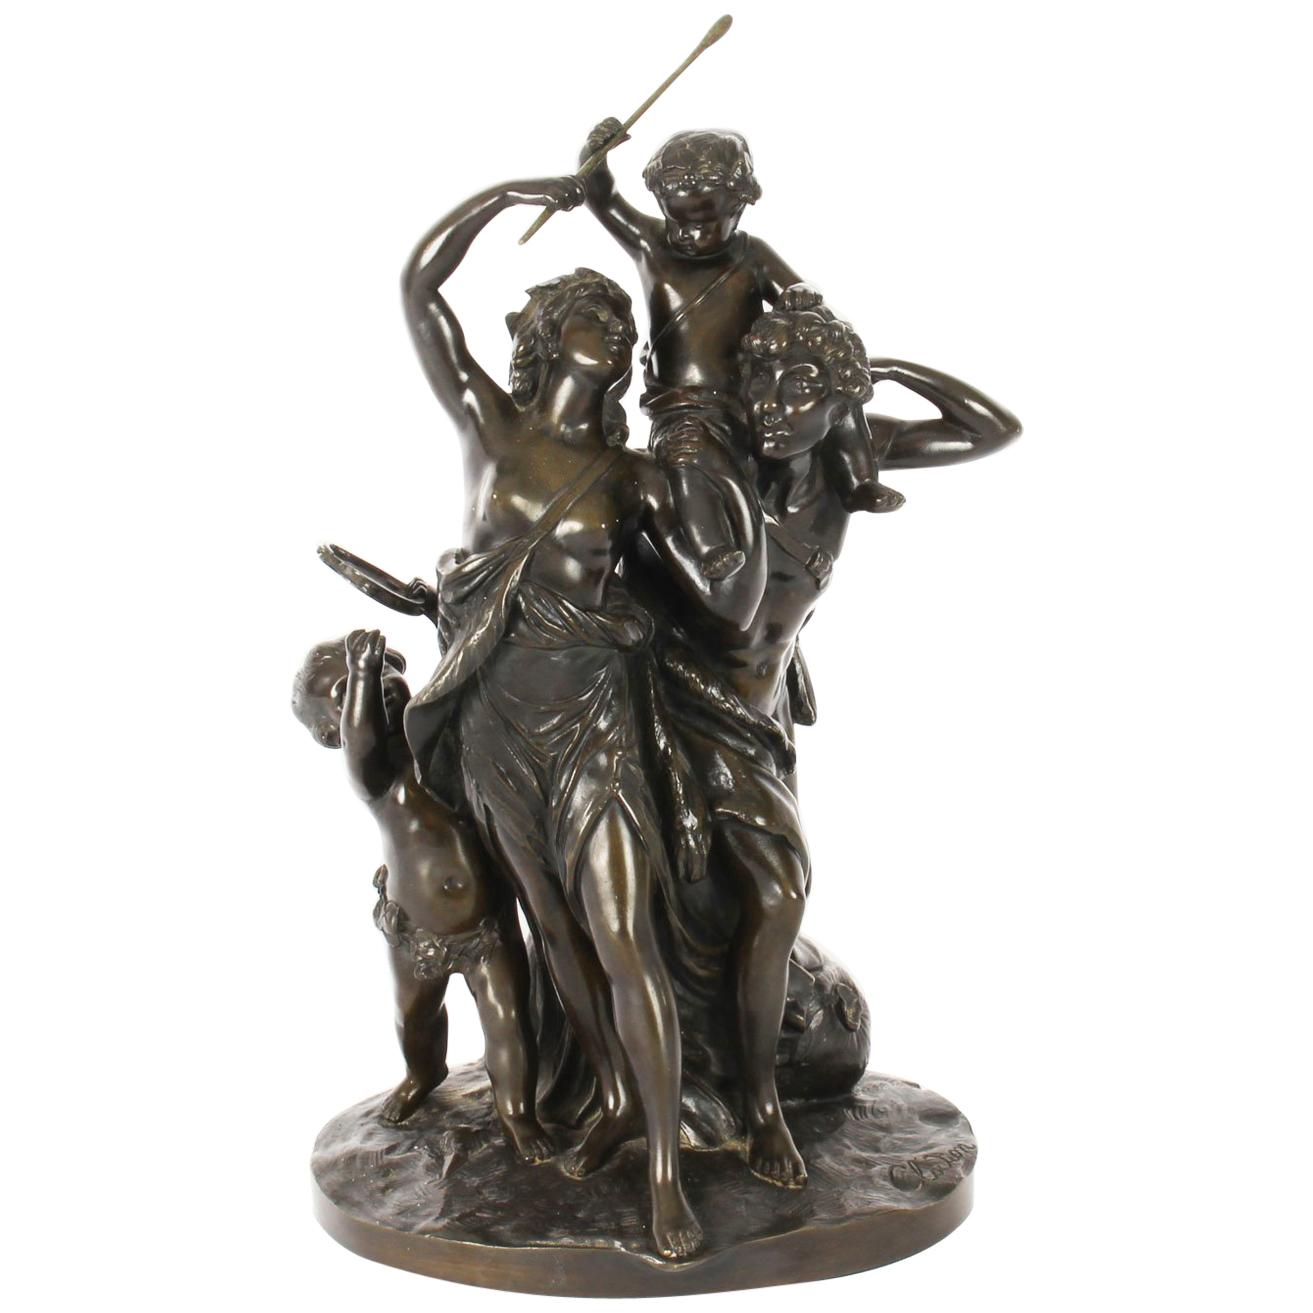 Antique Bronze Sculpture "The Triumph of Bacchus" Signed Clodion 19th Century